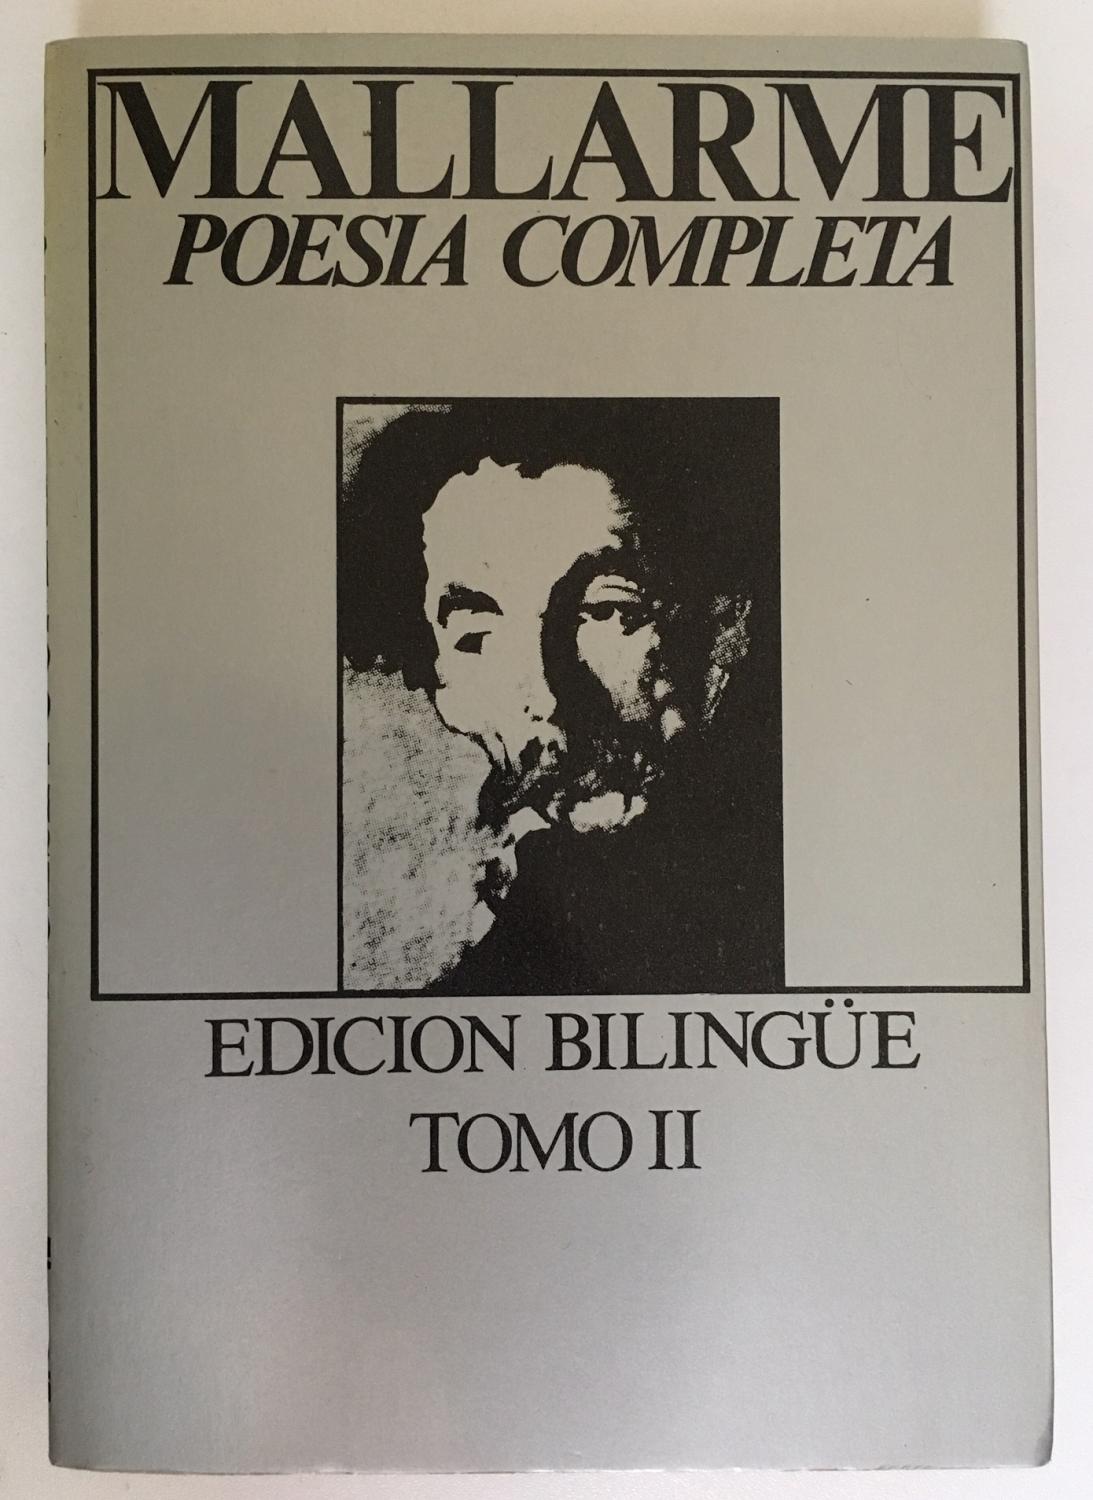 COMPLETA (EDICIÓN BILINGÜE TOMO II) STEPHANE MALLARME: Muy Encuadernación de tapa blanda (1979) 1ª | Satyricon & Co